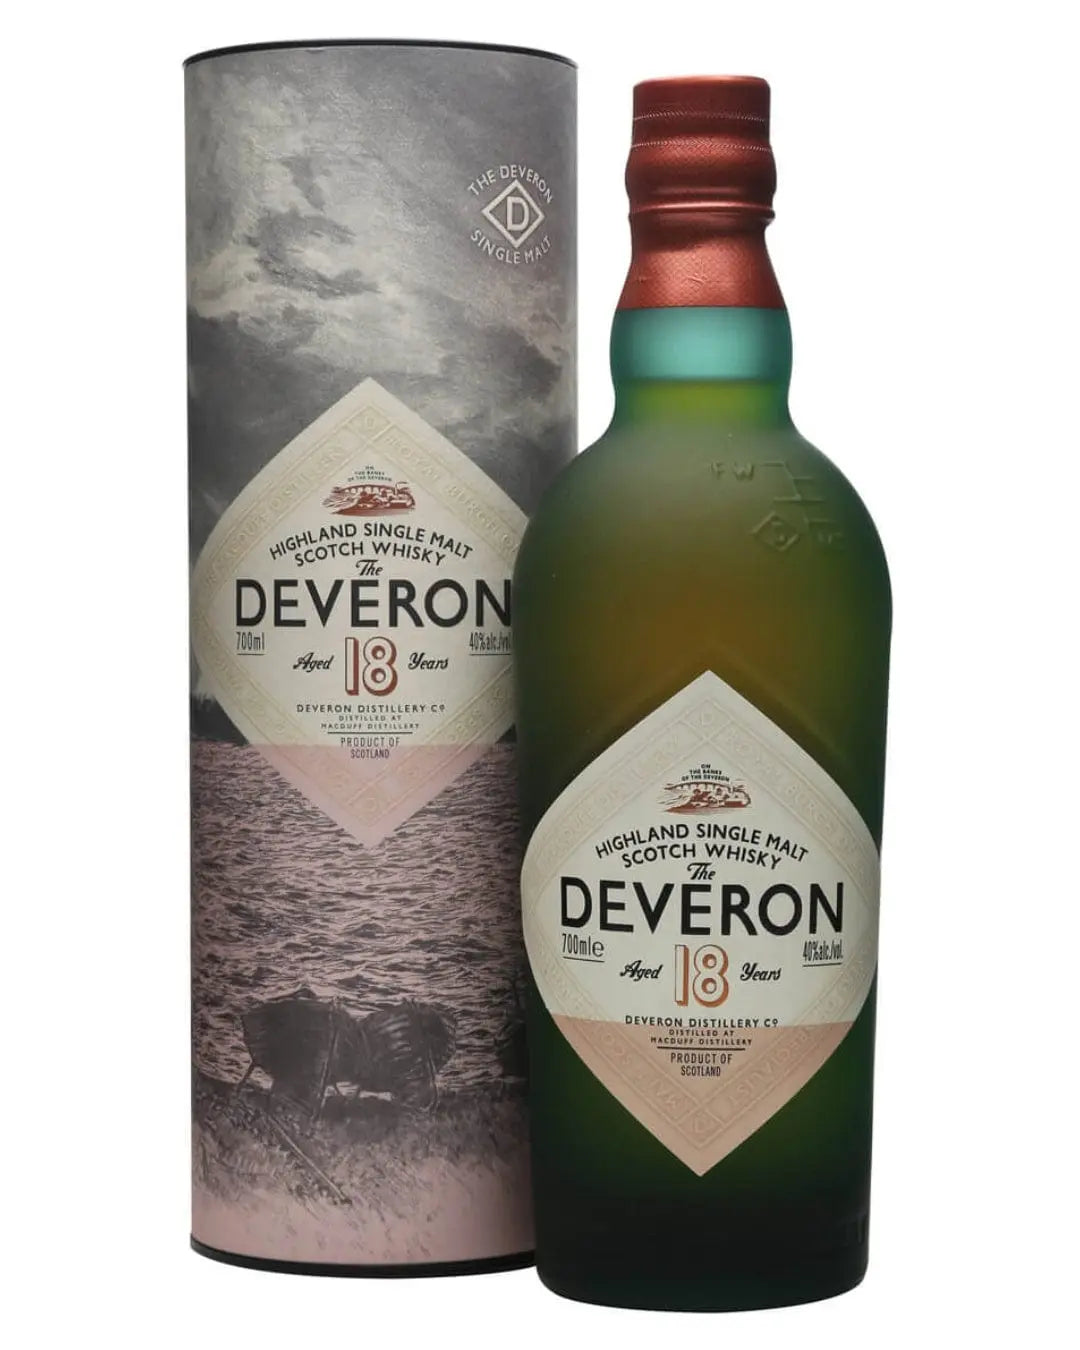 The Deveron 18 Year Old Highland Single Malt Scotch Whisky, 70 cl Whisky